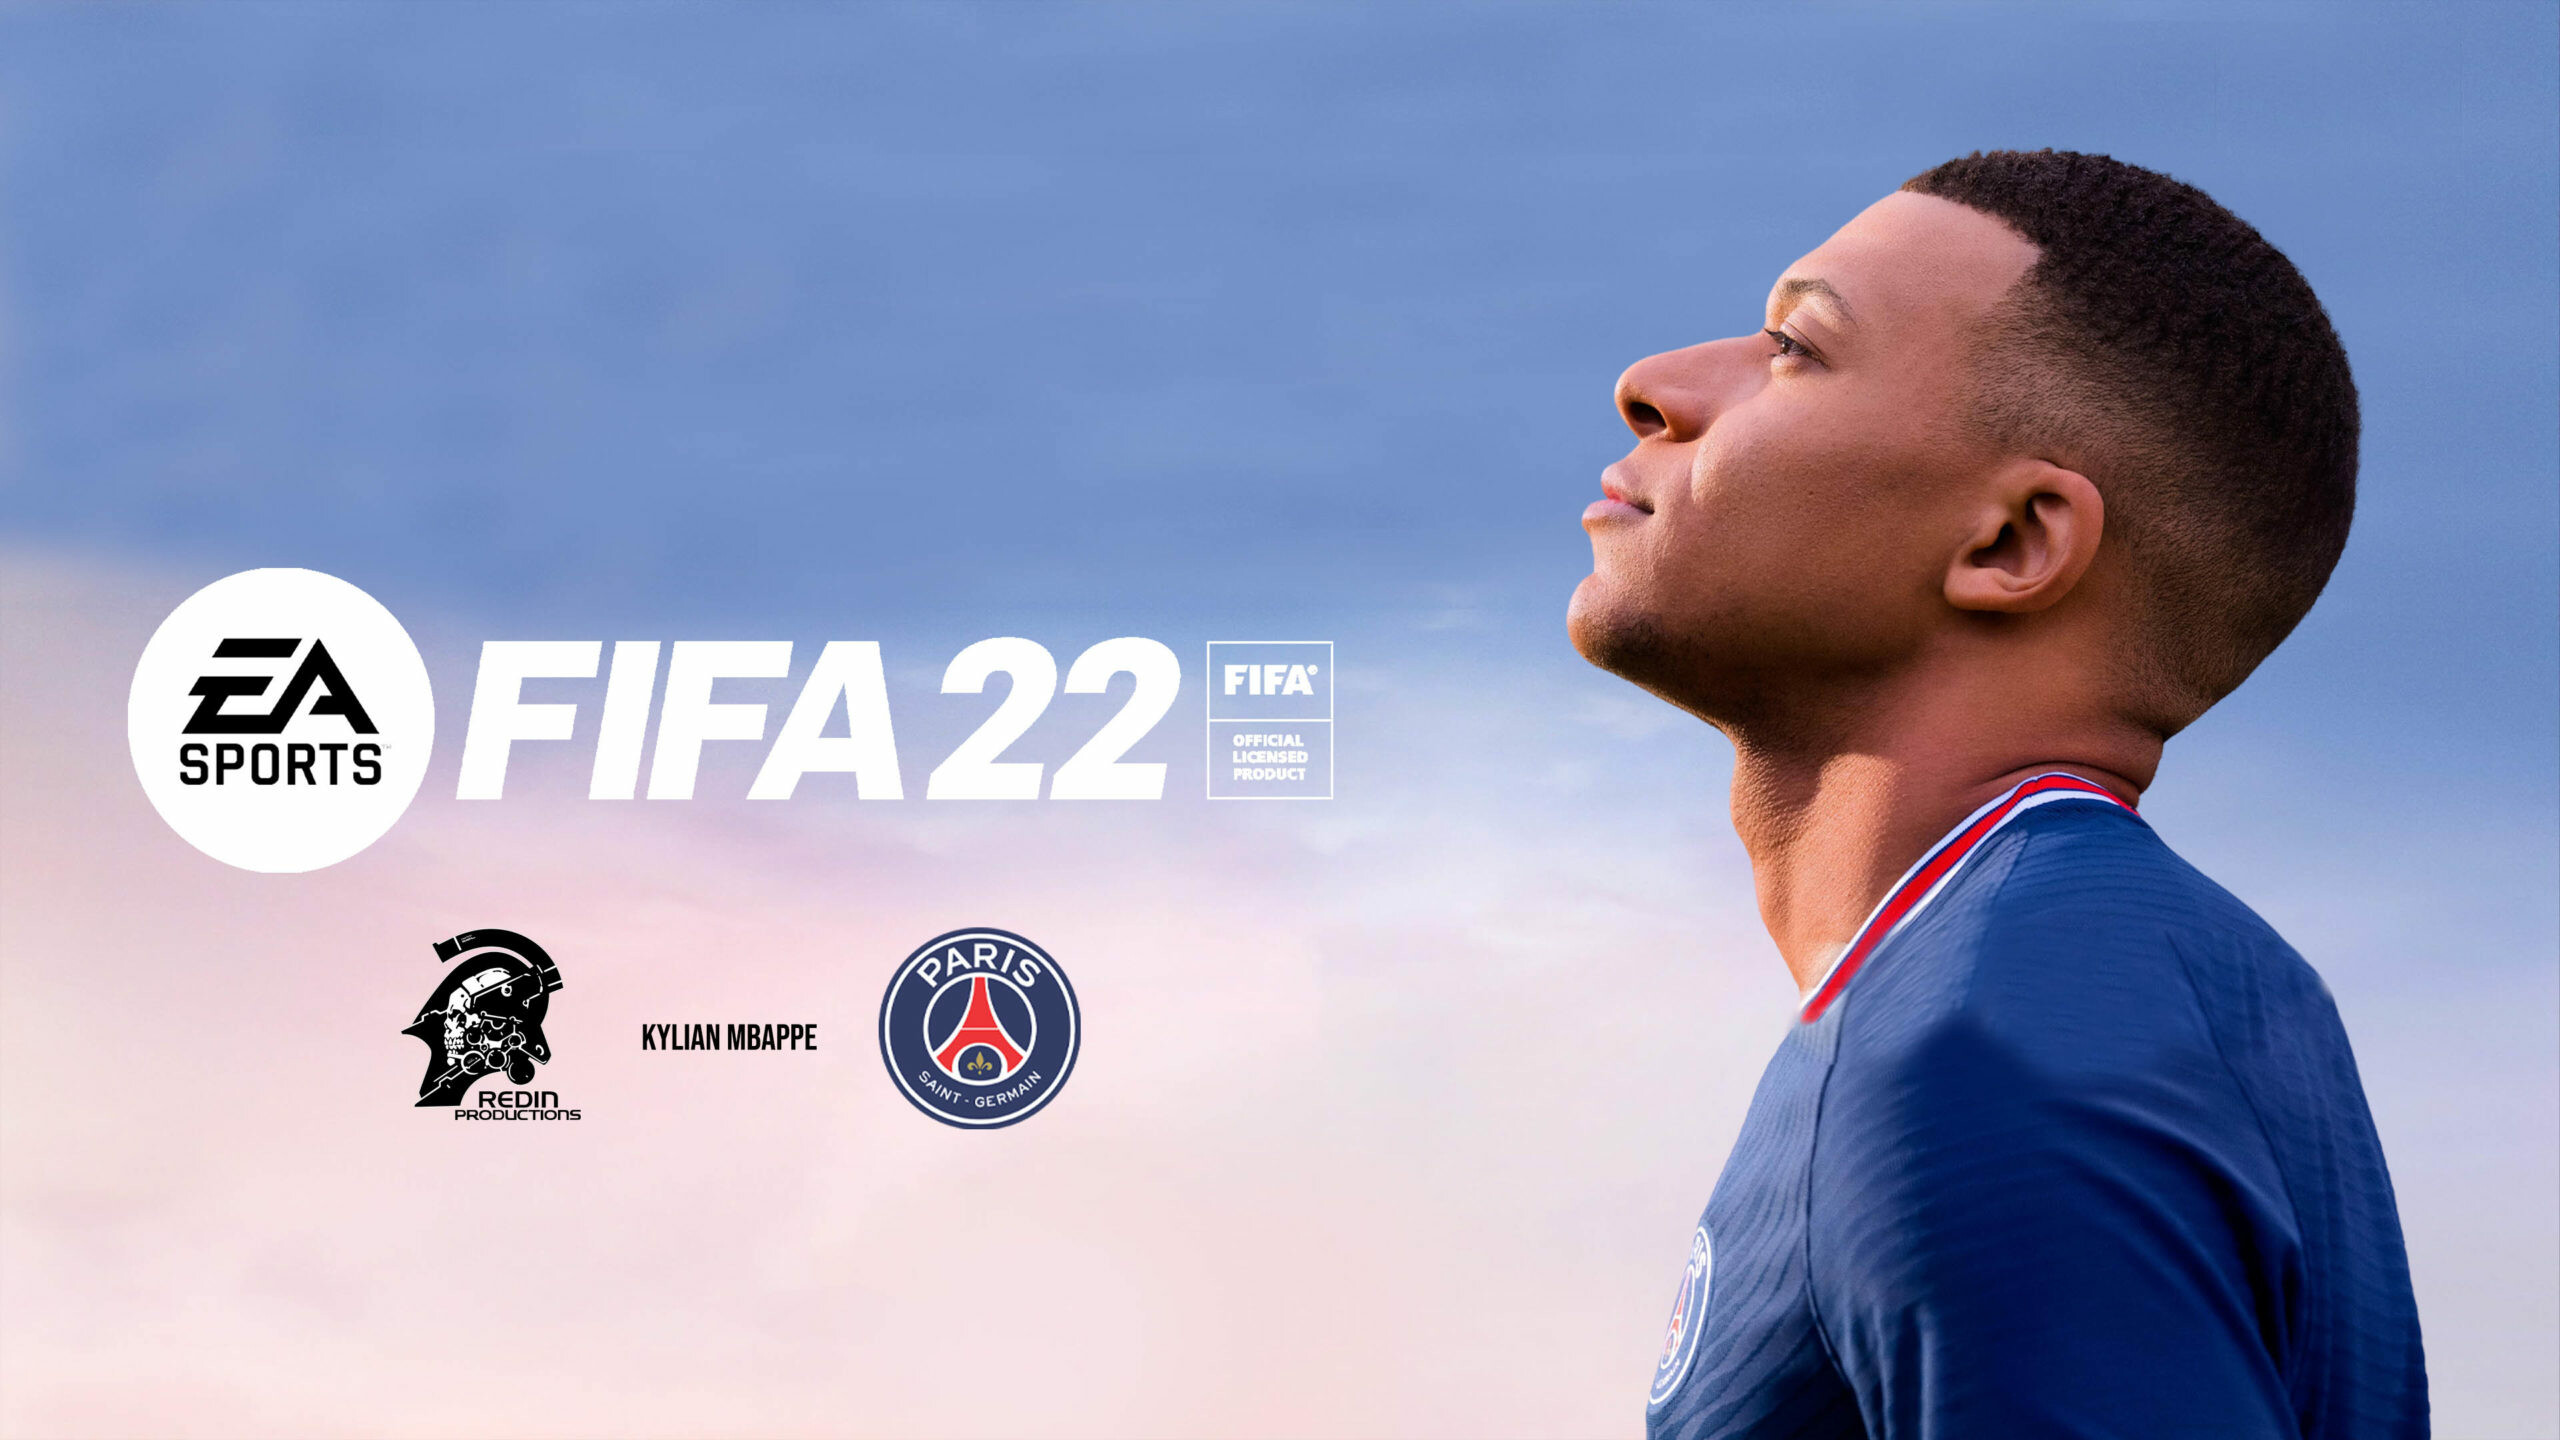 FIFA: Kylian Mbappe, Cover athlete, EA Sports. 2560x1440 HD Wallpaper.